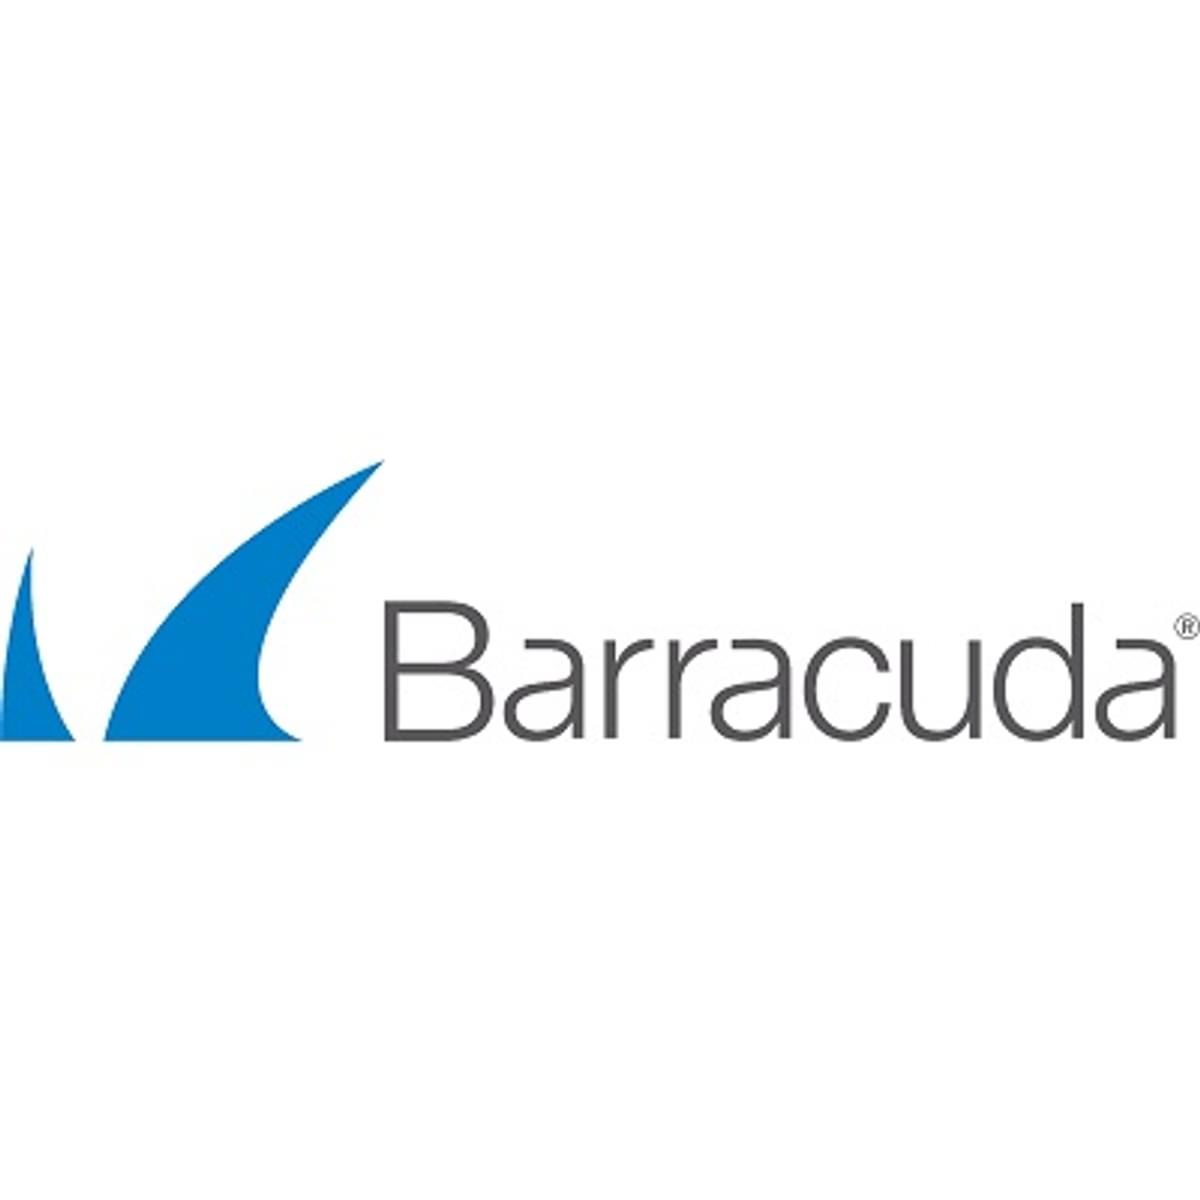 Barracuda neemt RMM platform Managed Workplace over van Avast image